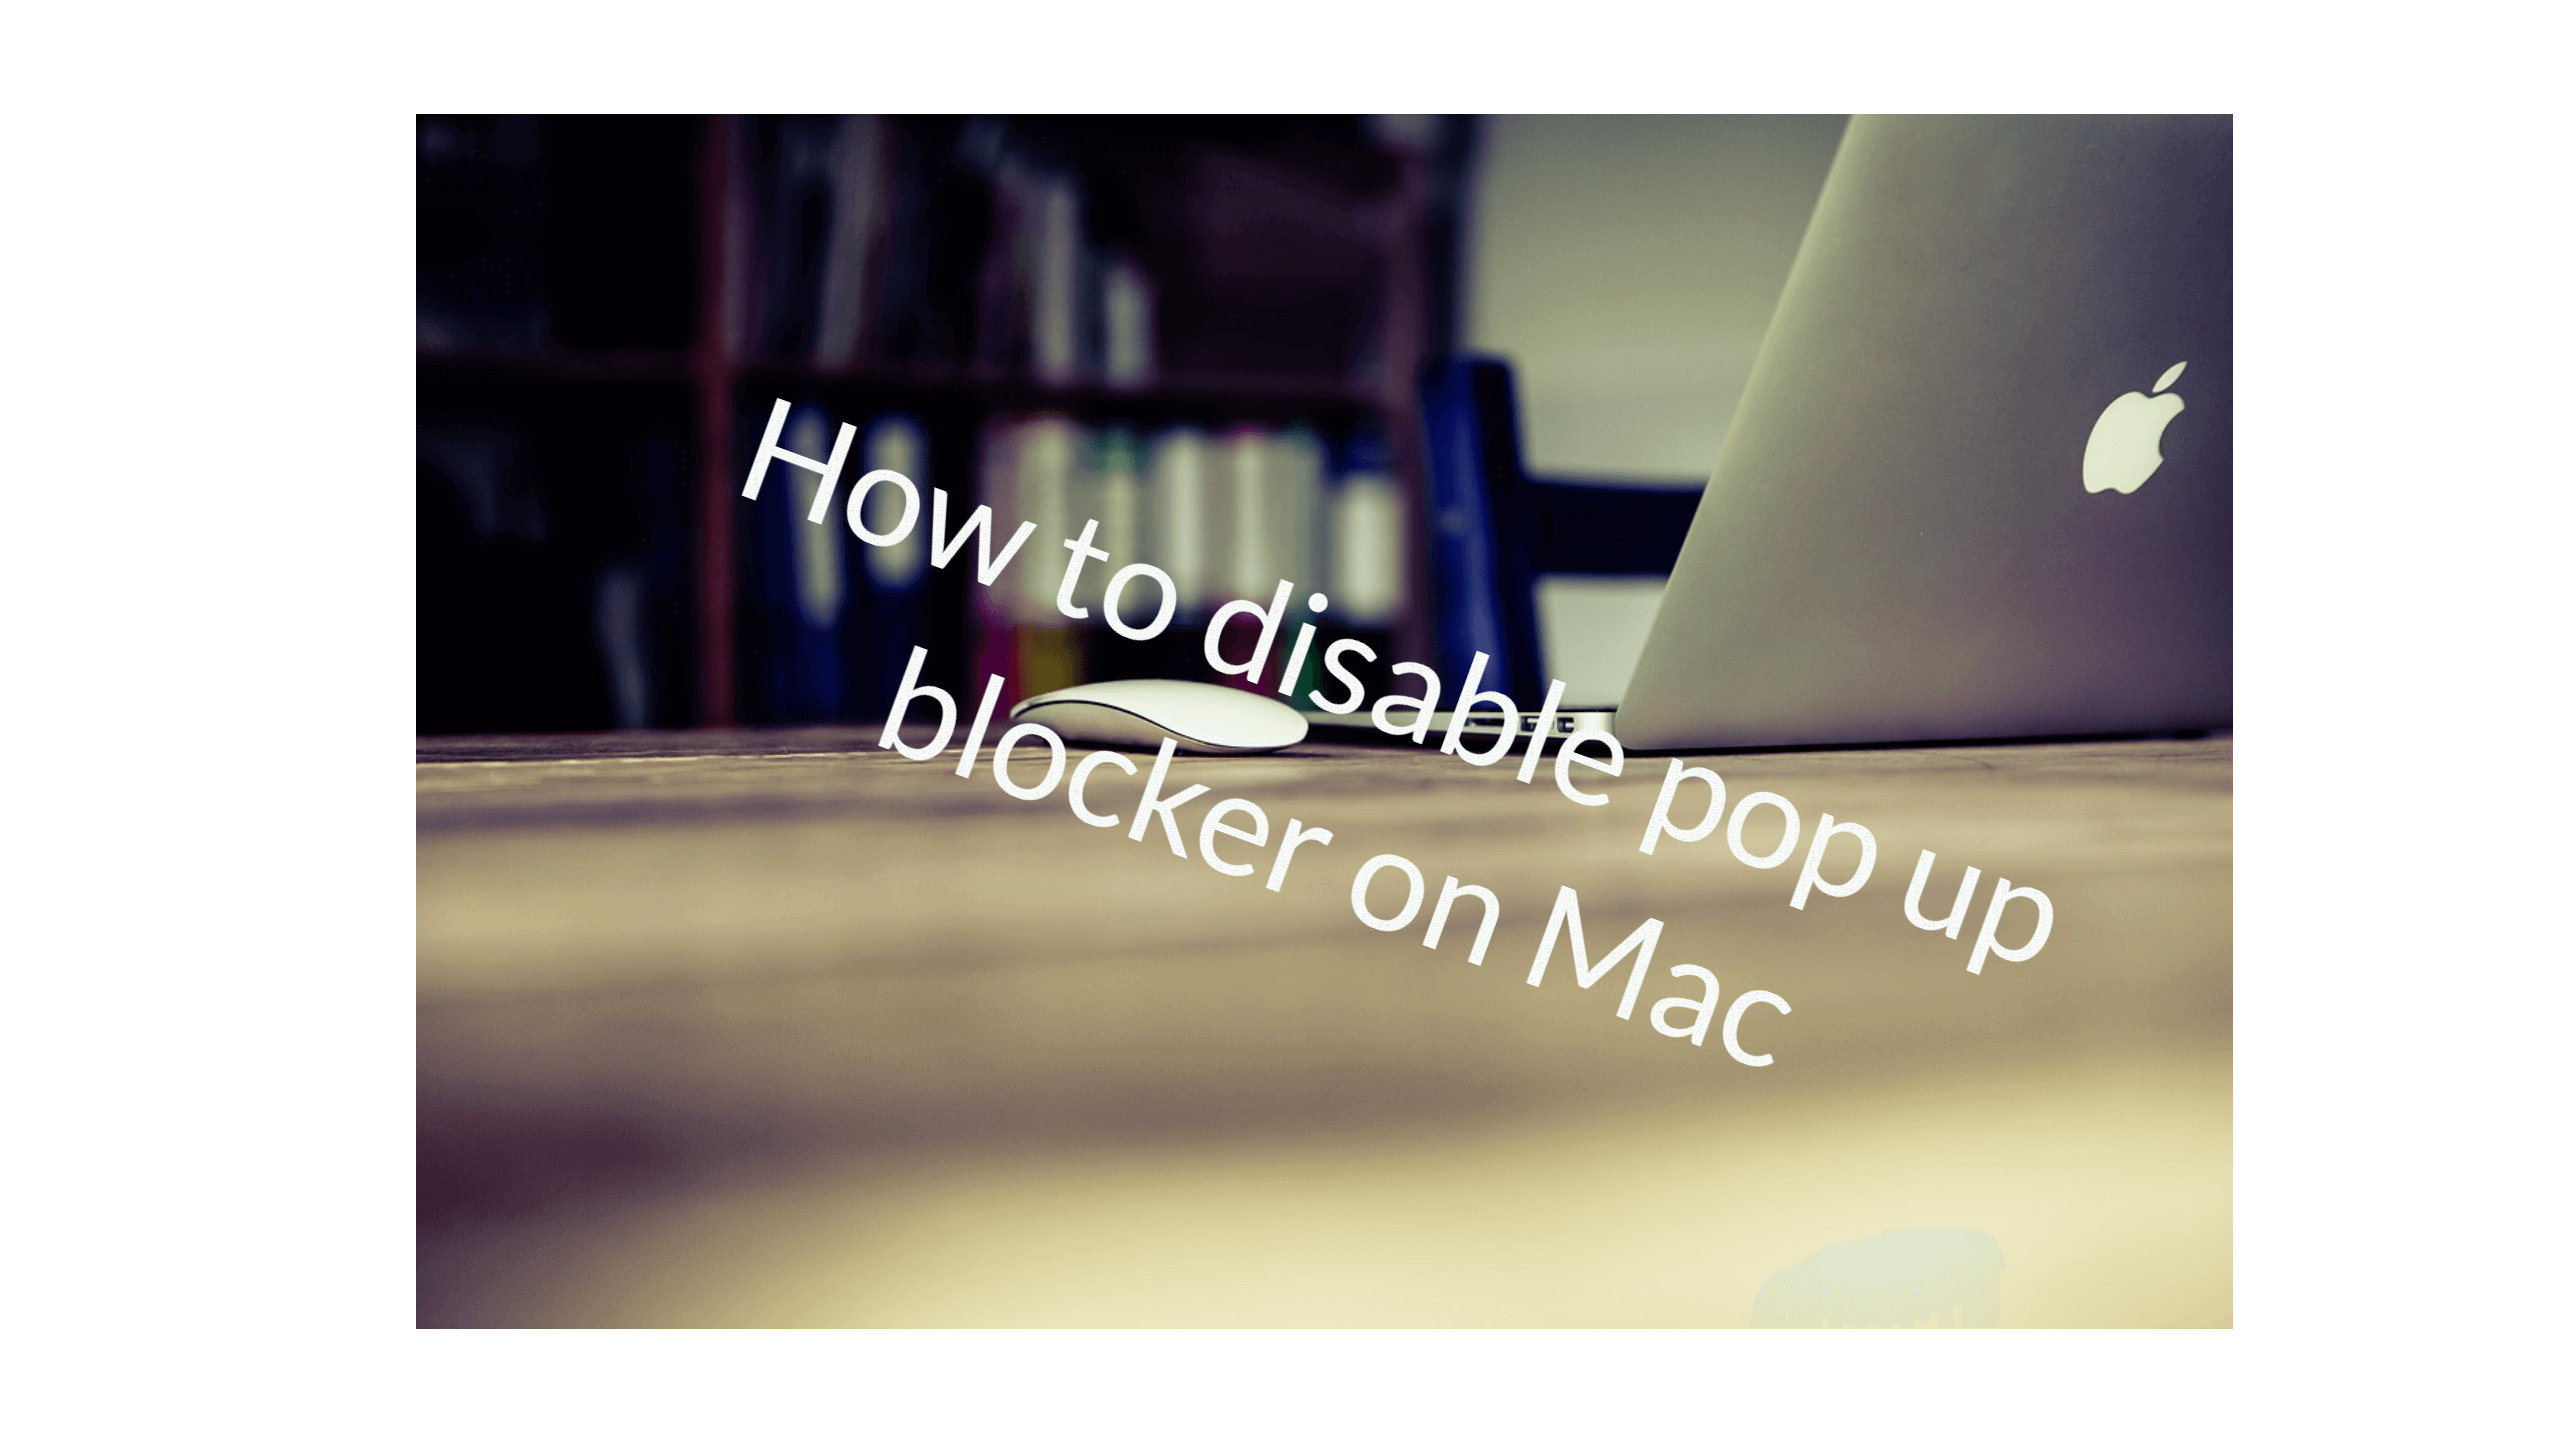 how do i turn off pop up blocker in firefox on a mac